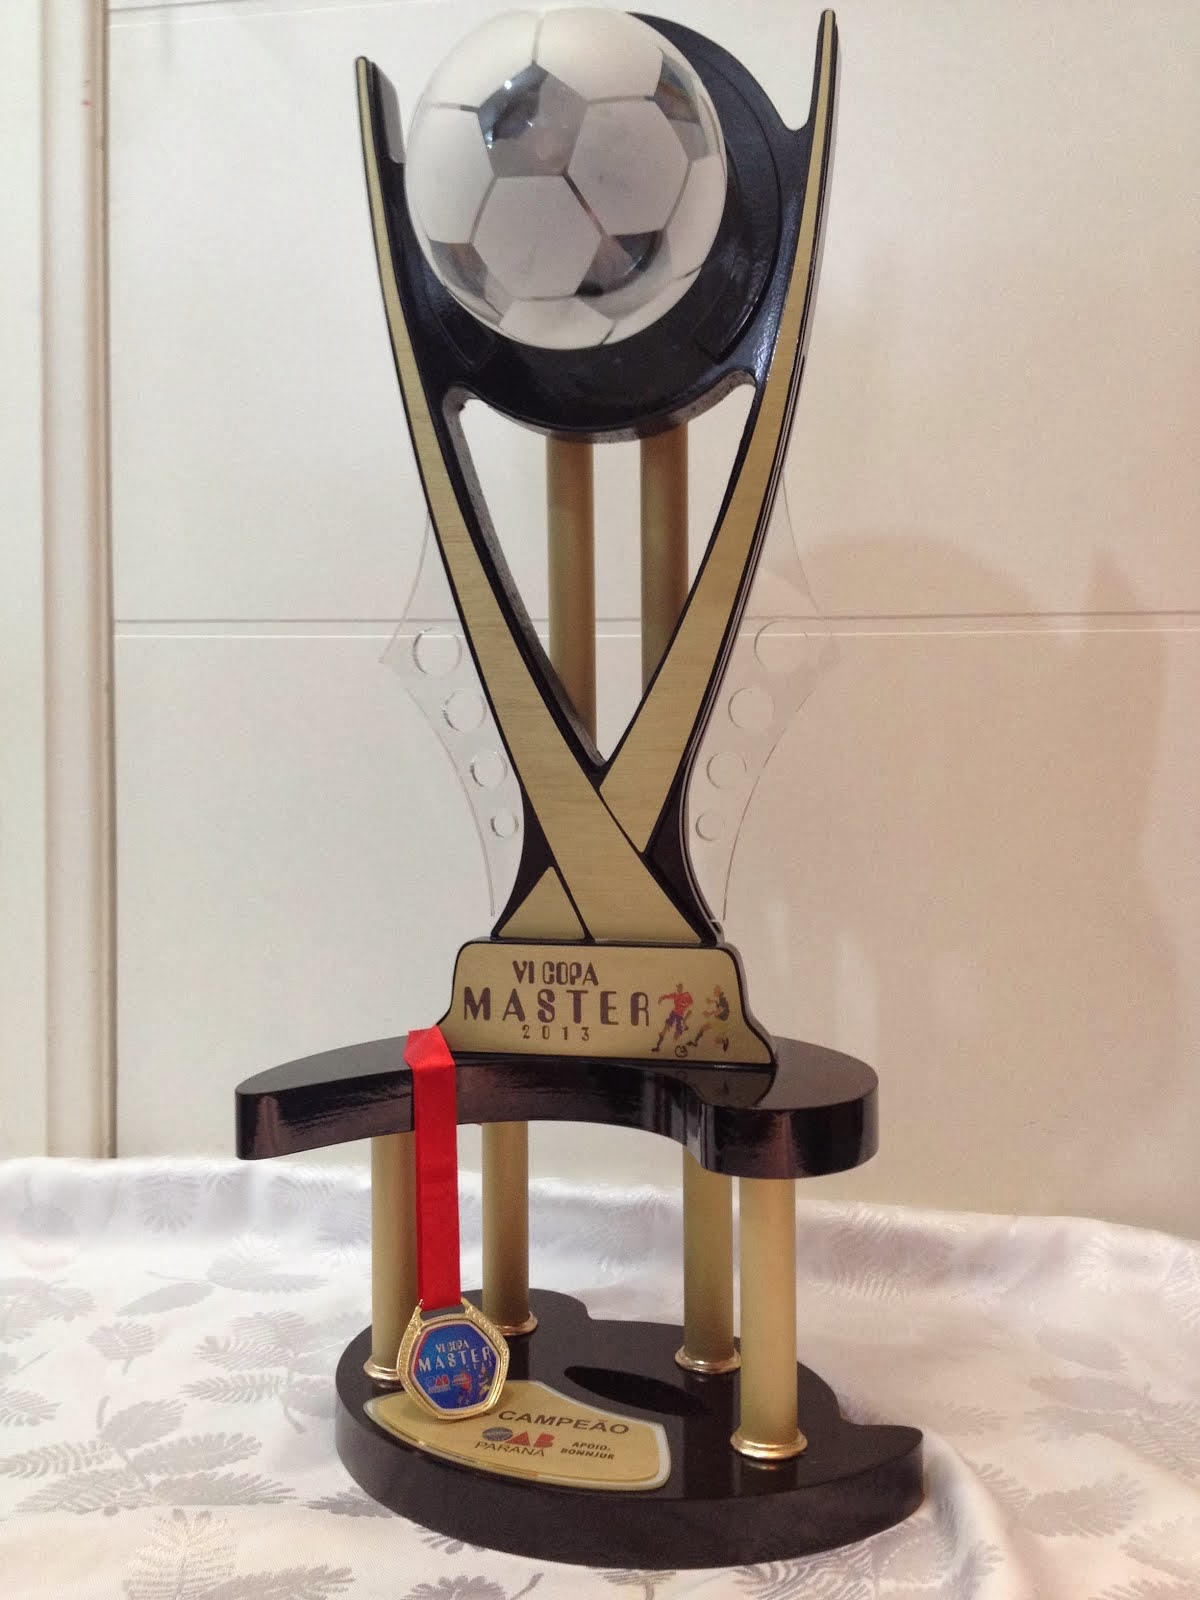 1º Lugar na VI Copa Master OAB 2013